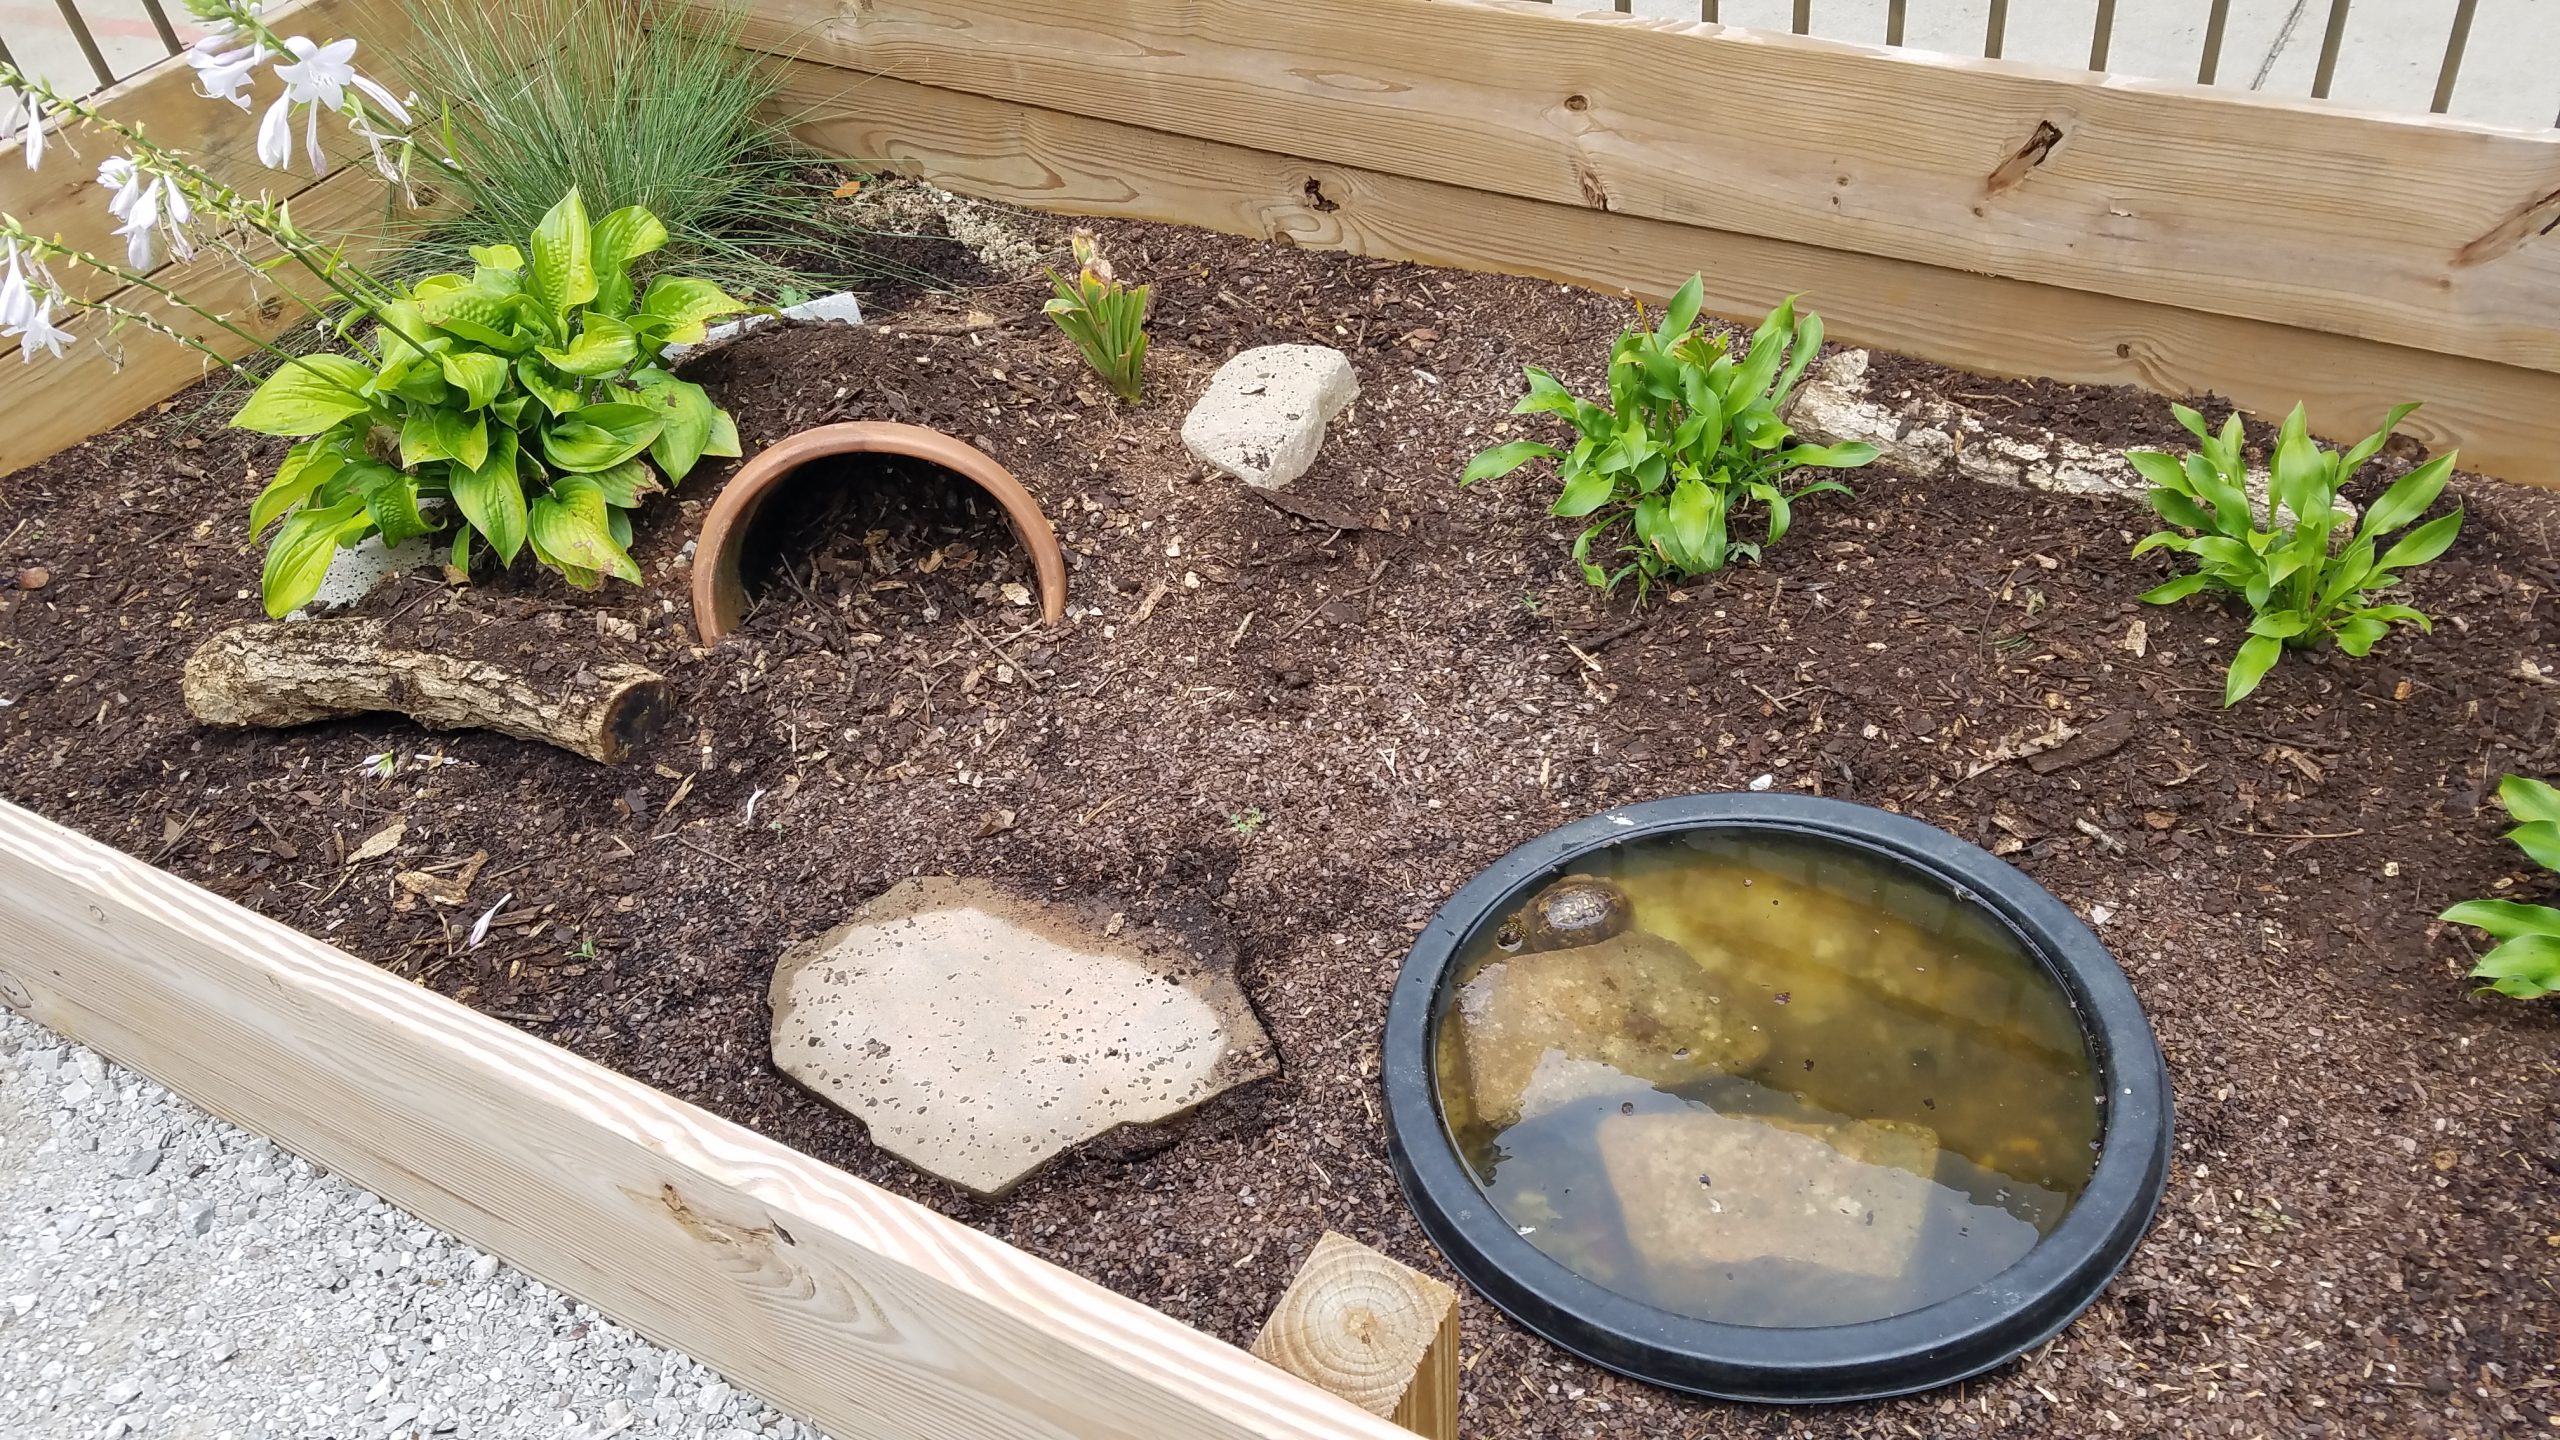 How to Make a Box Turtle Habitat Outside?